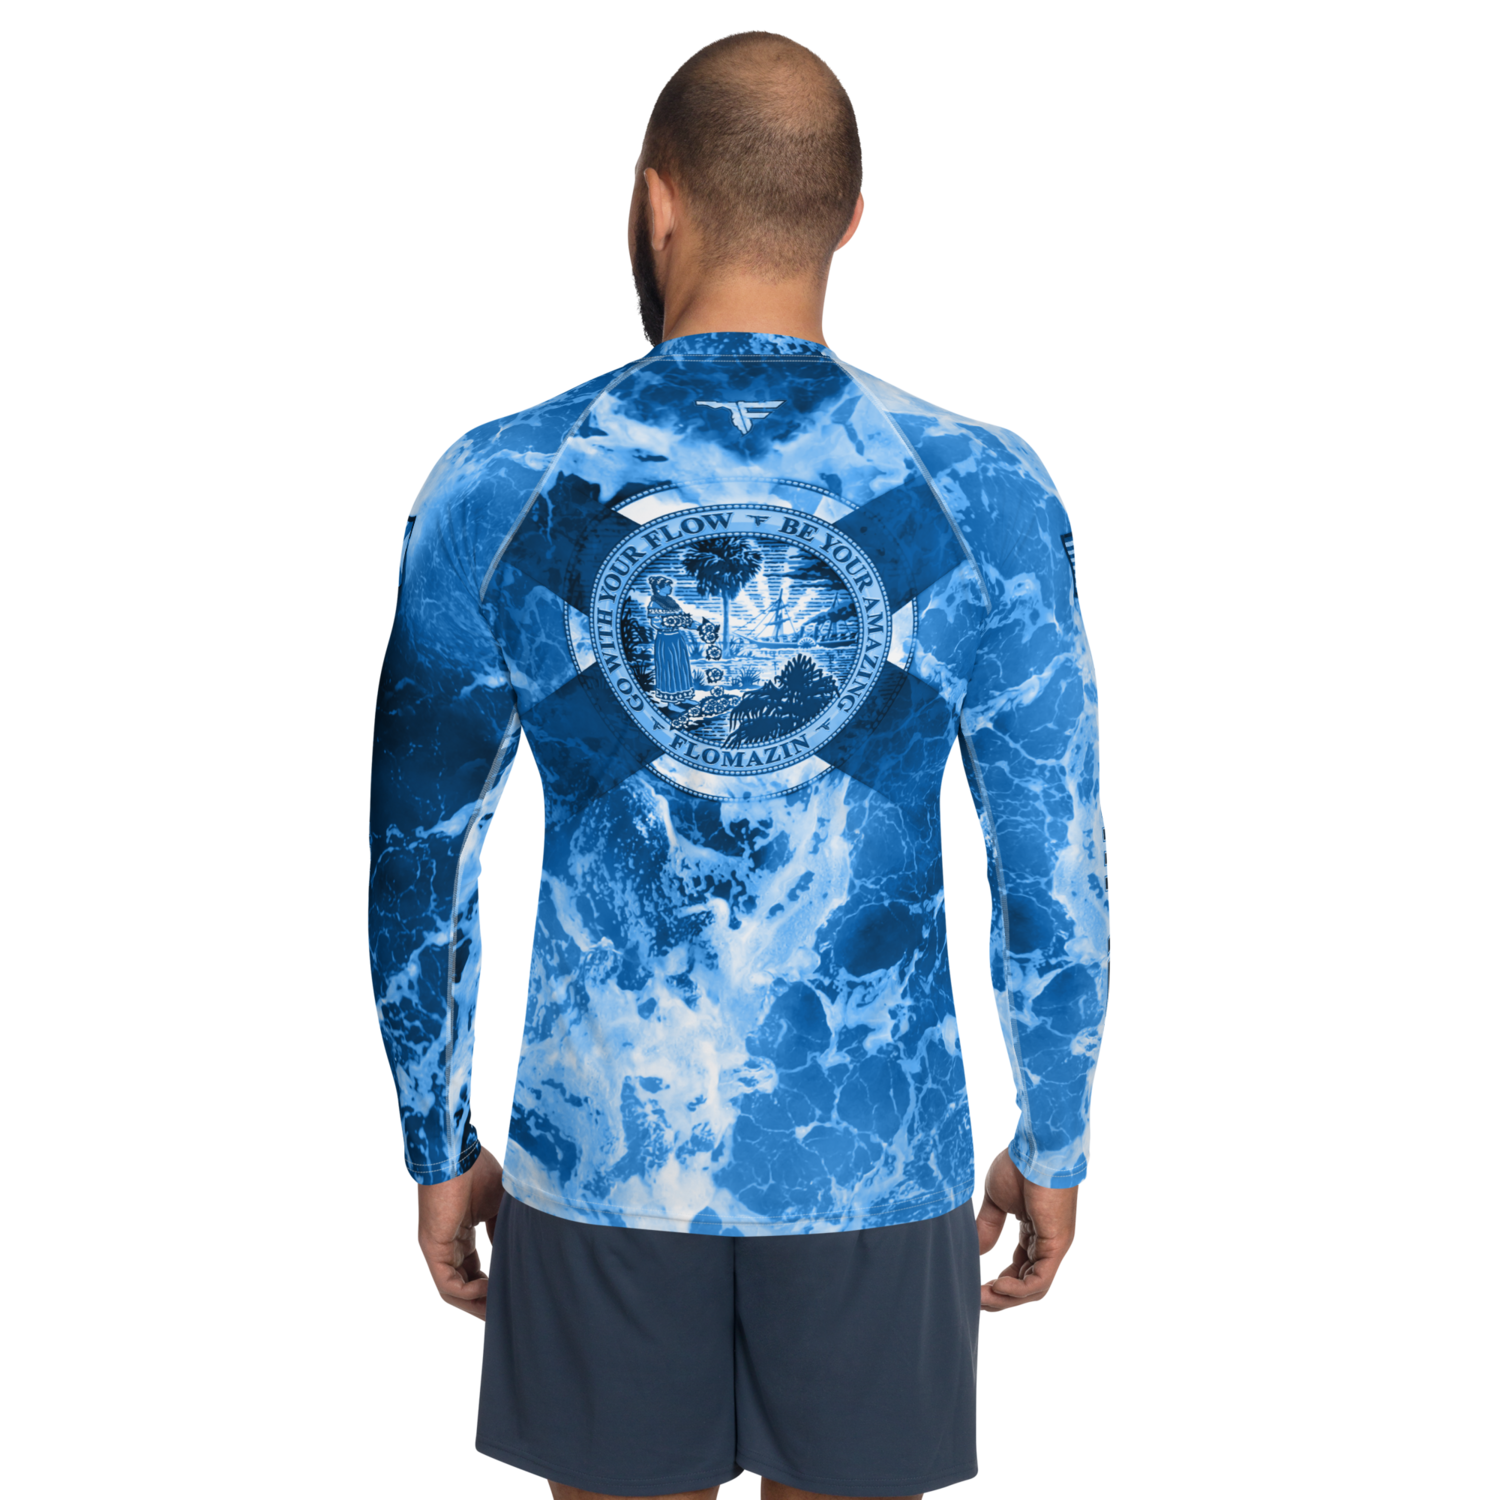 FLOMAZIN ROCKY WATERS 1.0 Men's/Unisex Long Sleeve Shirt (Quick Dry Fabric or Rash Guard)